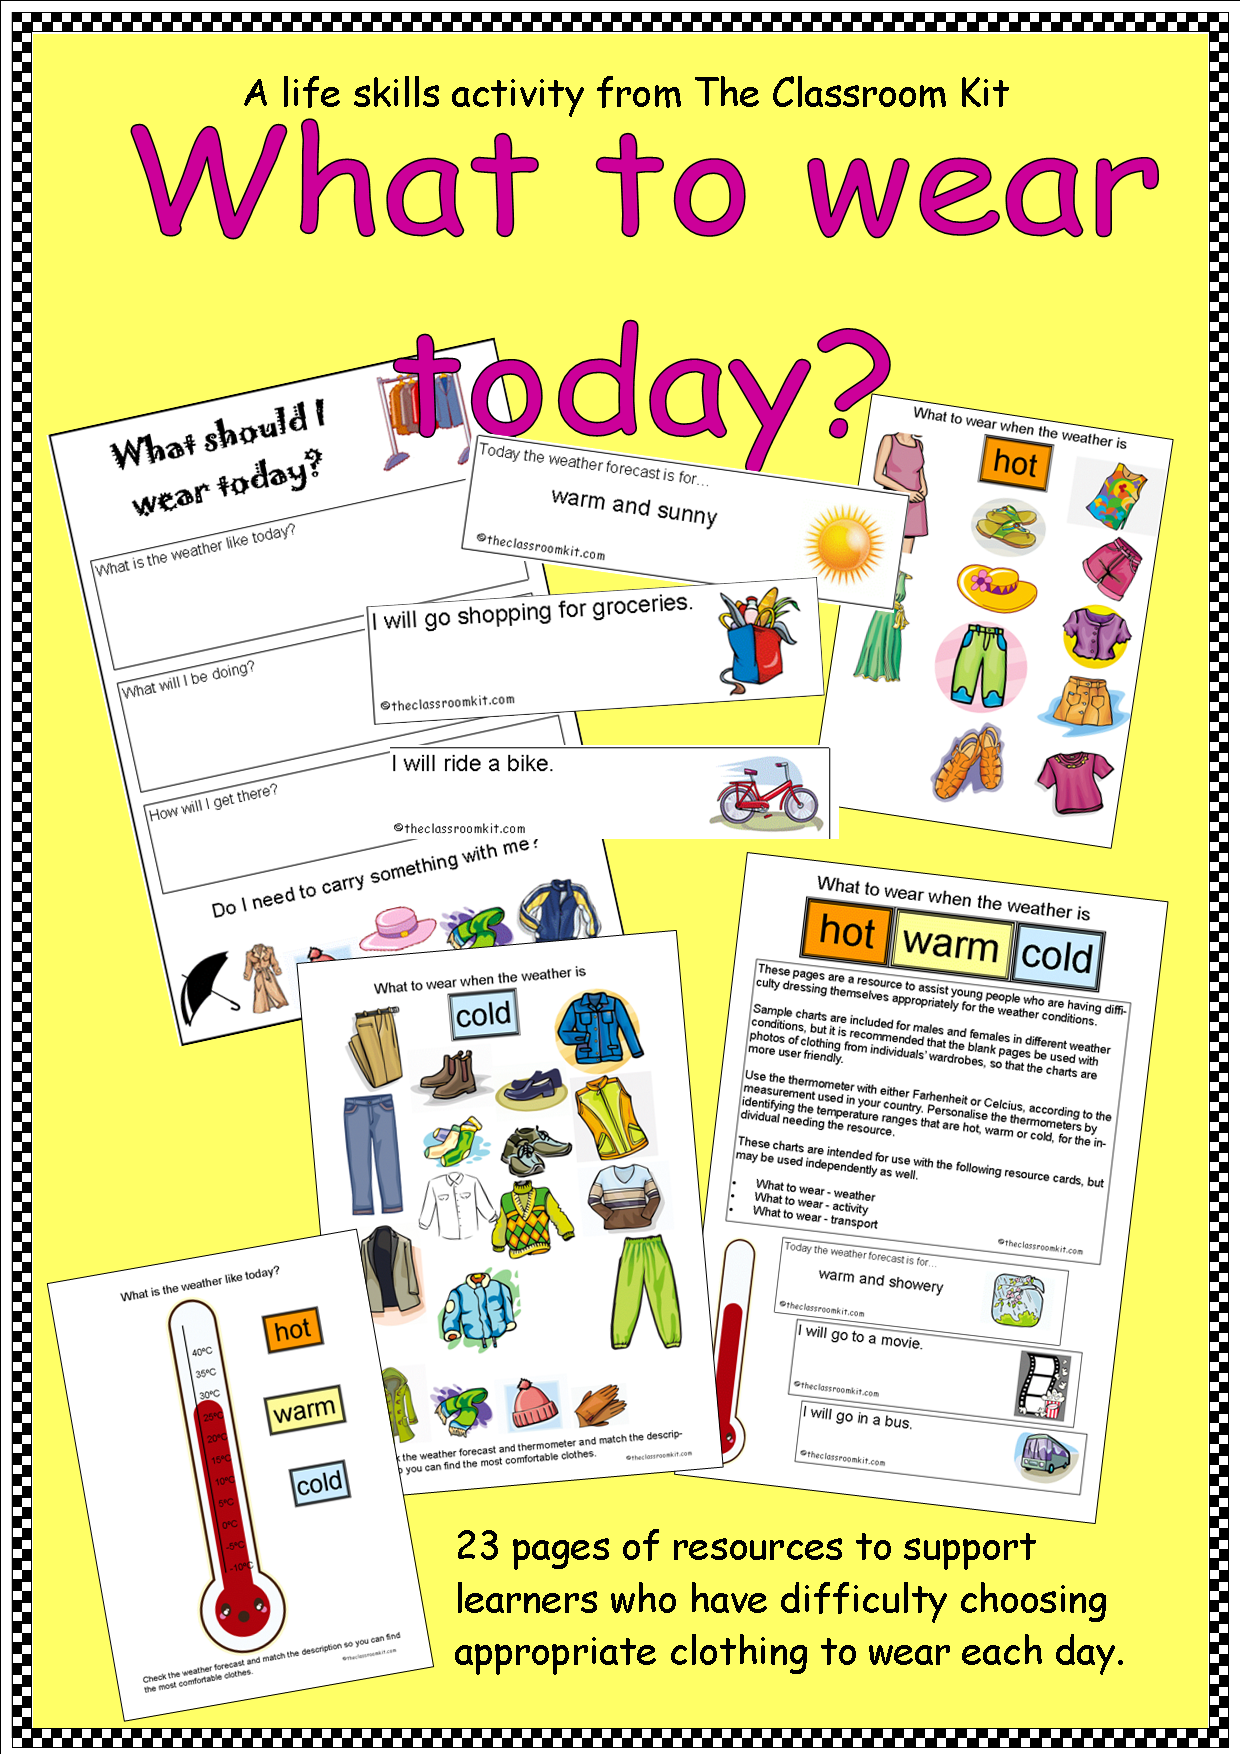 calendar activity - special education resource